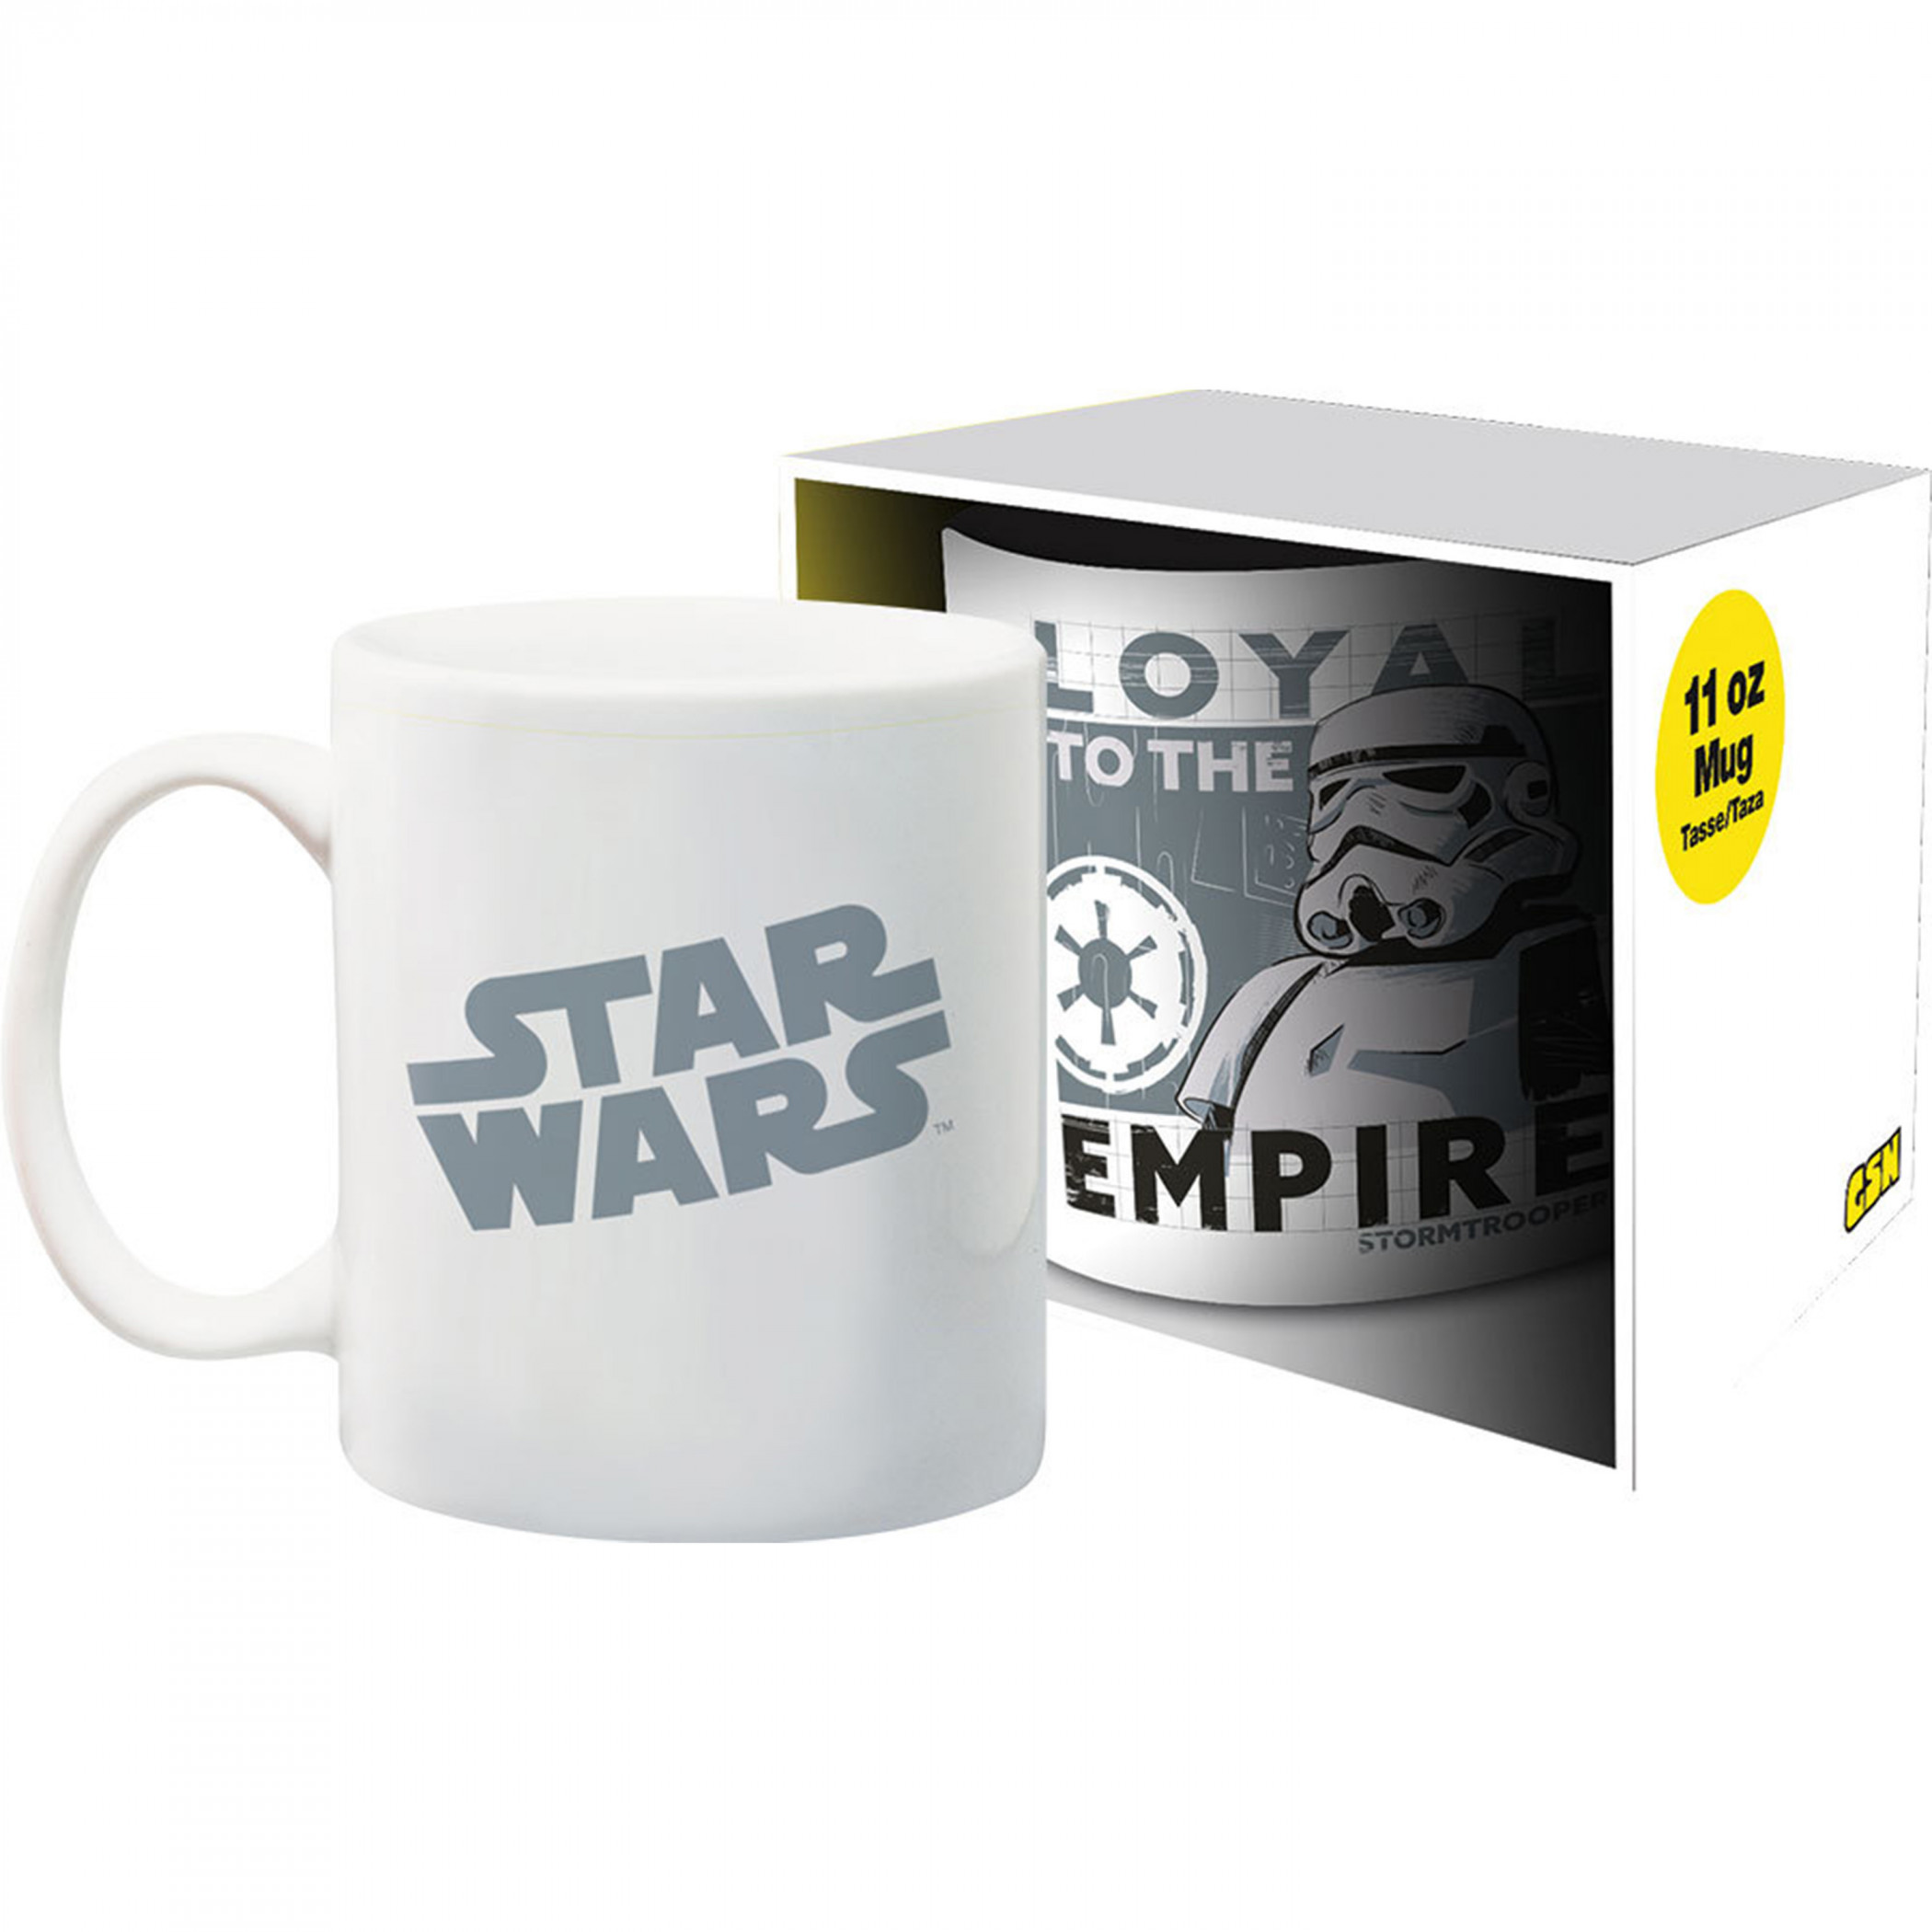 Star Wars Loyal To The Empire 11 oz Ceramic Mug